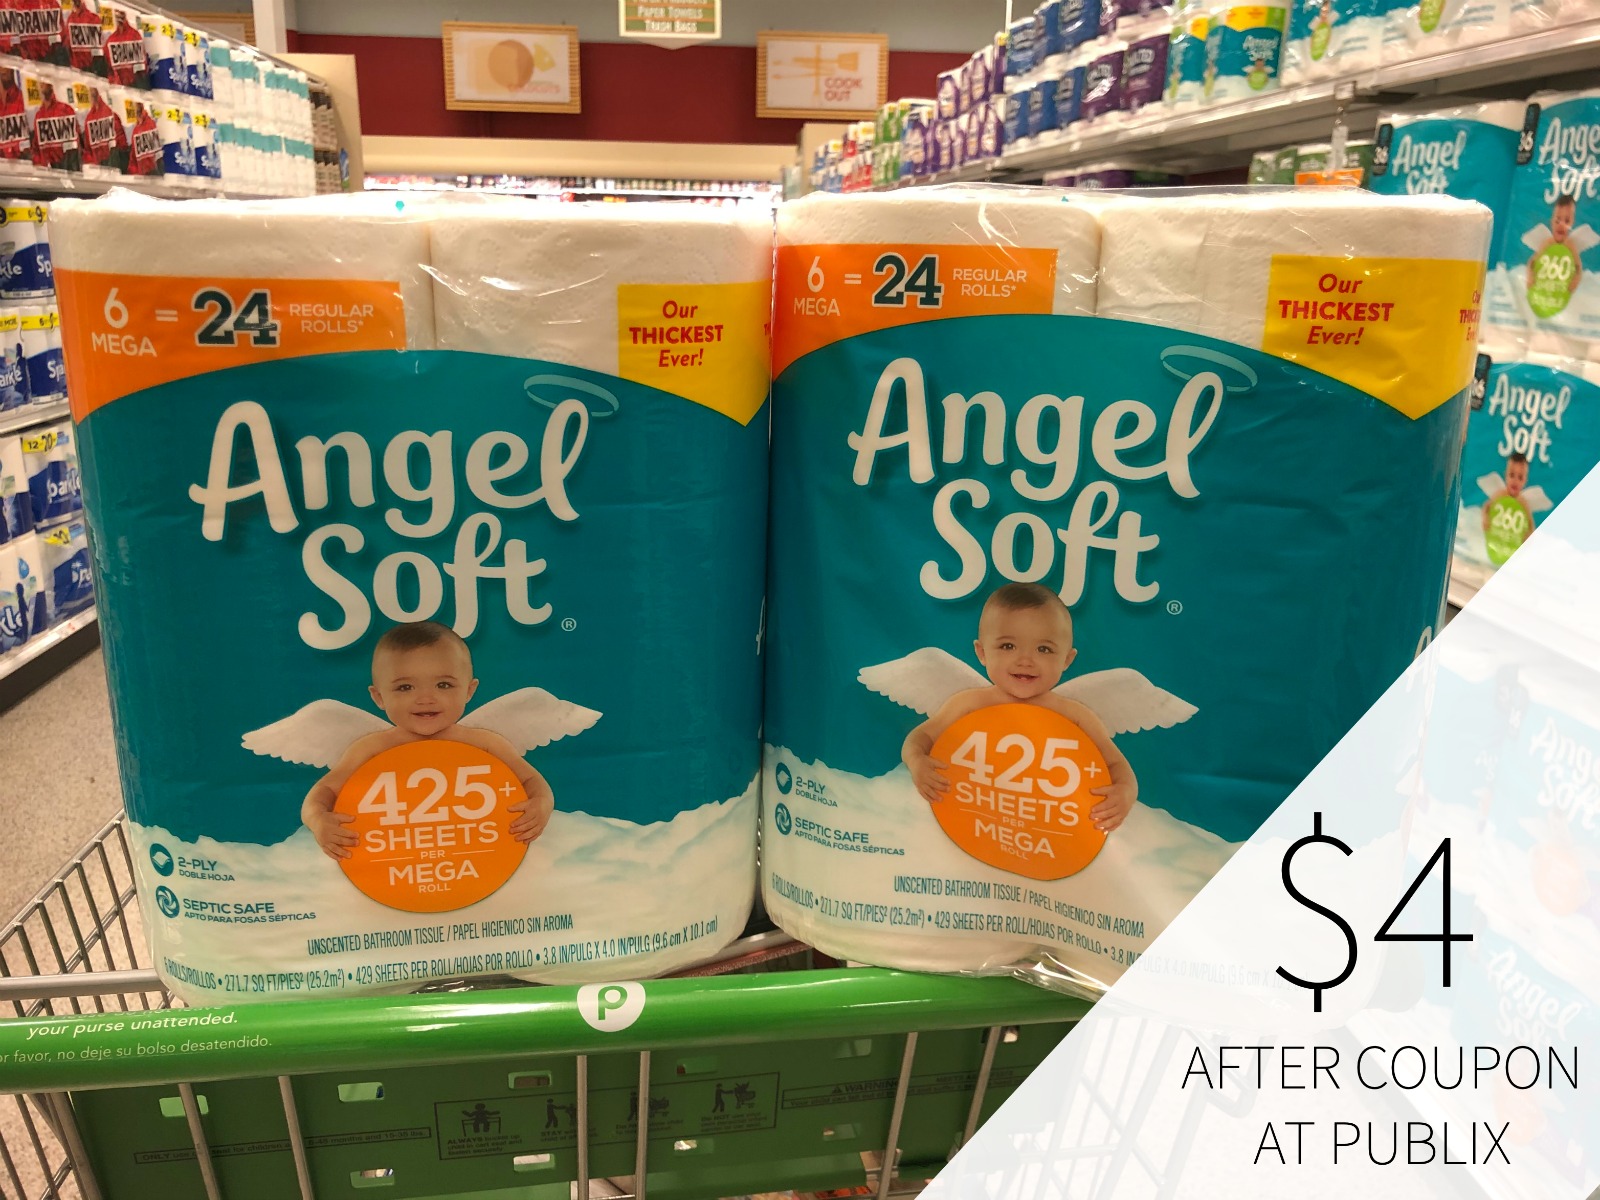 Can't Miss Deals On Angel Soft Toilet Paper At Publix on I Heart Publix